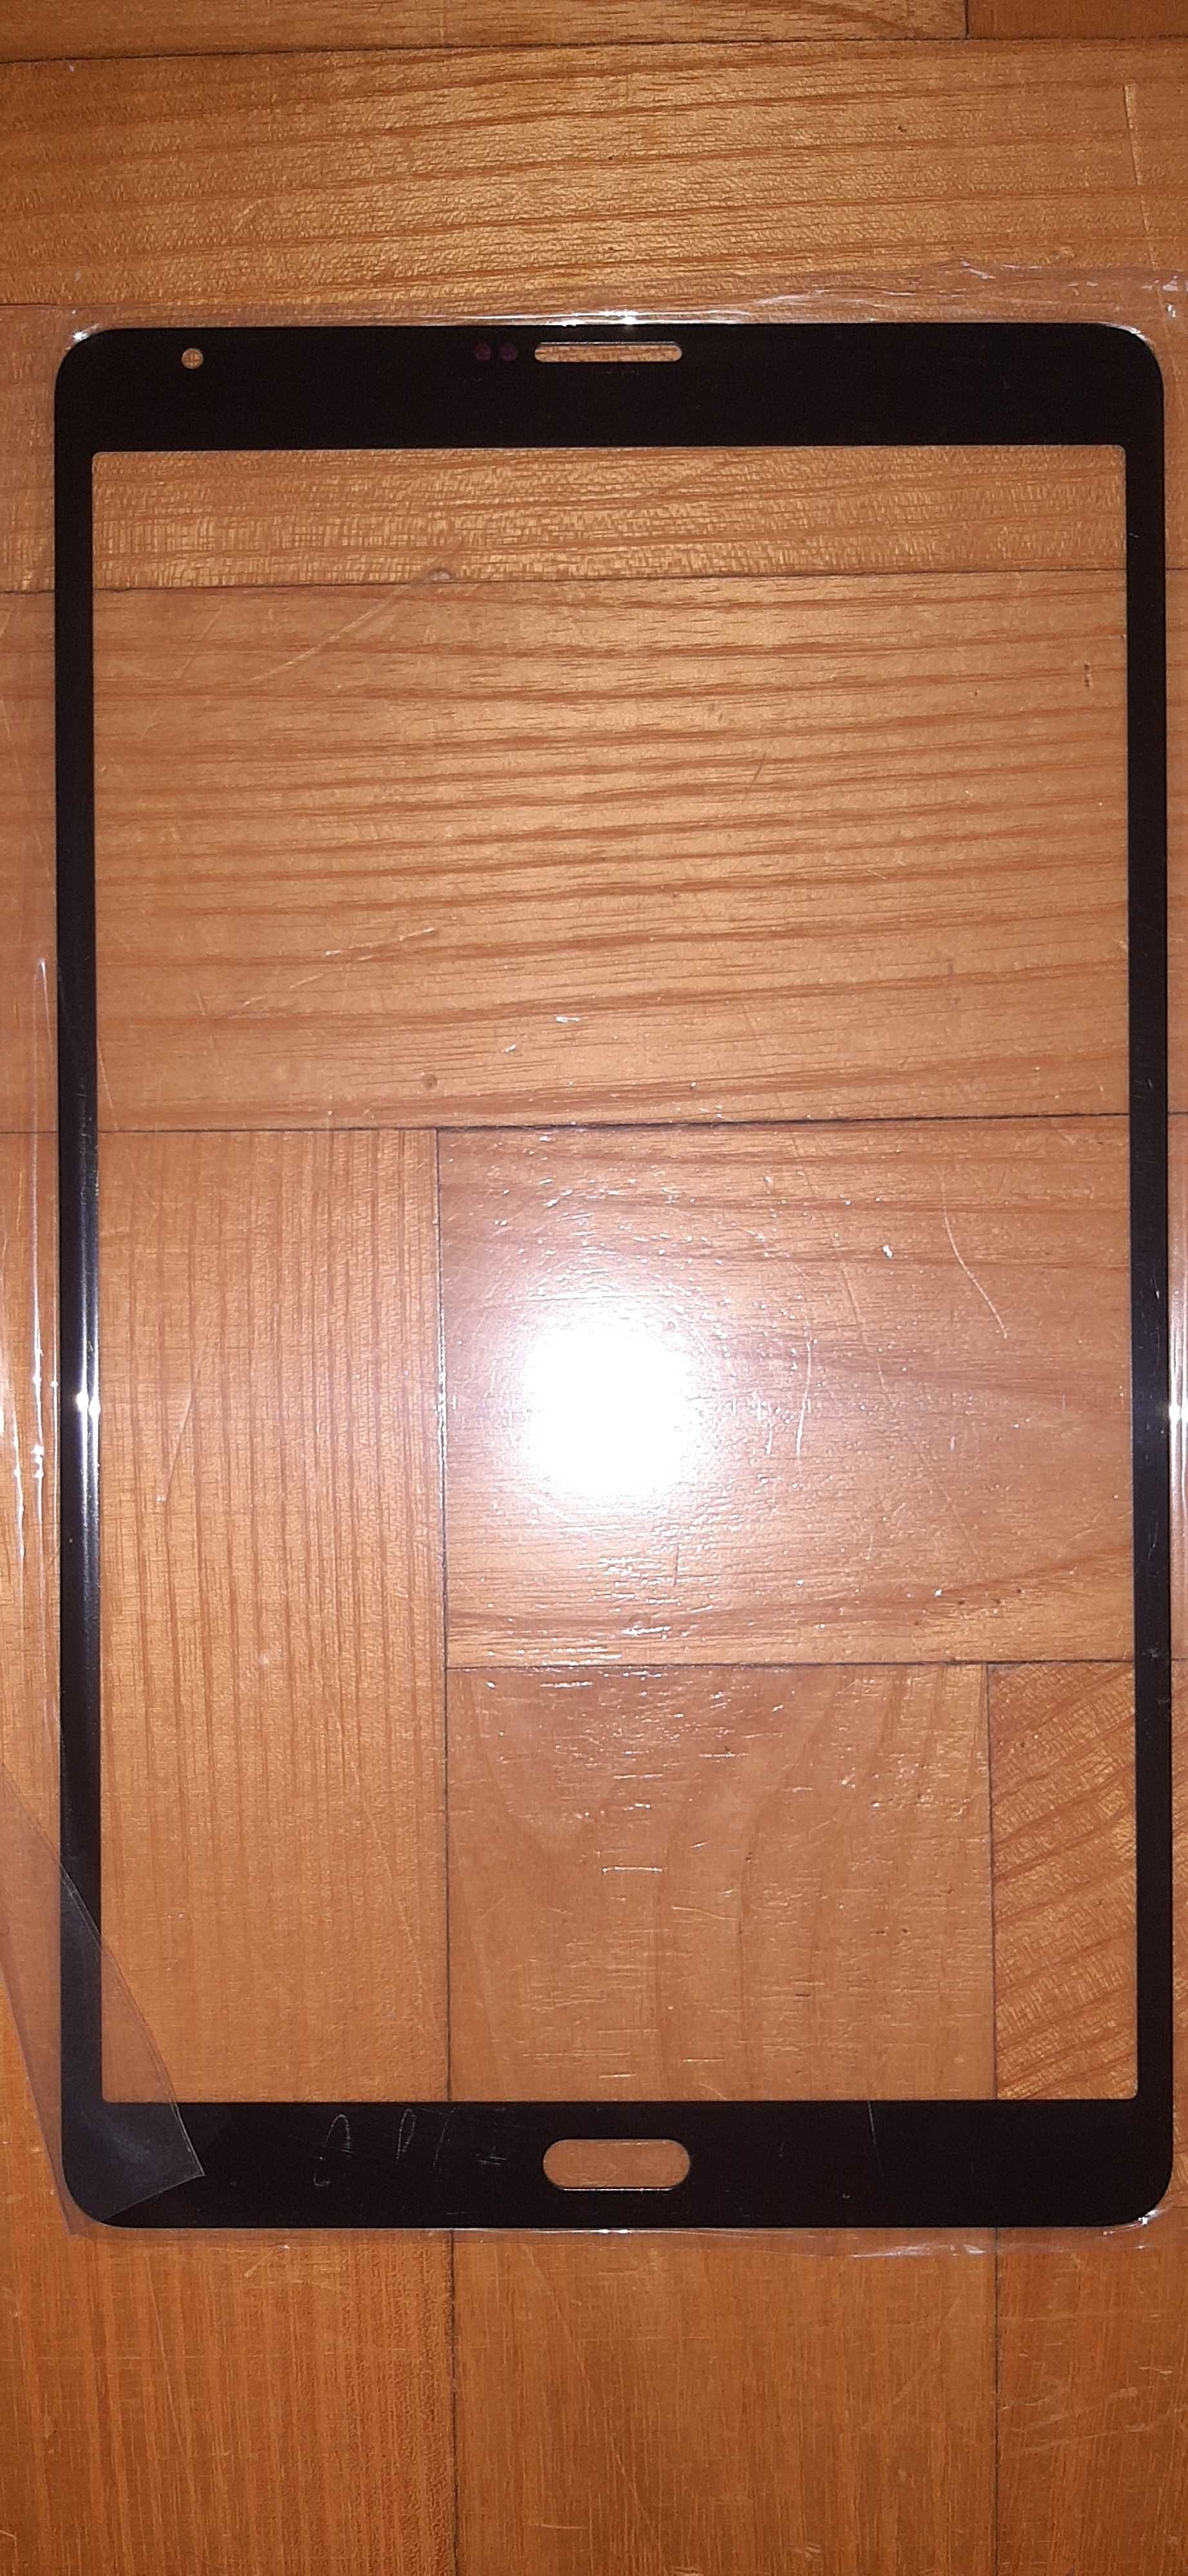 SZYBKA Ekran dotykowy Samsung Tab S 8.4 T700 T705 Kolory